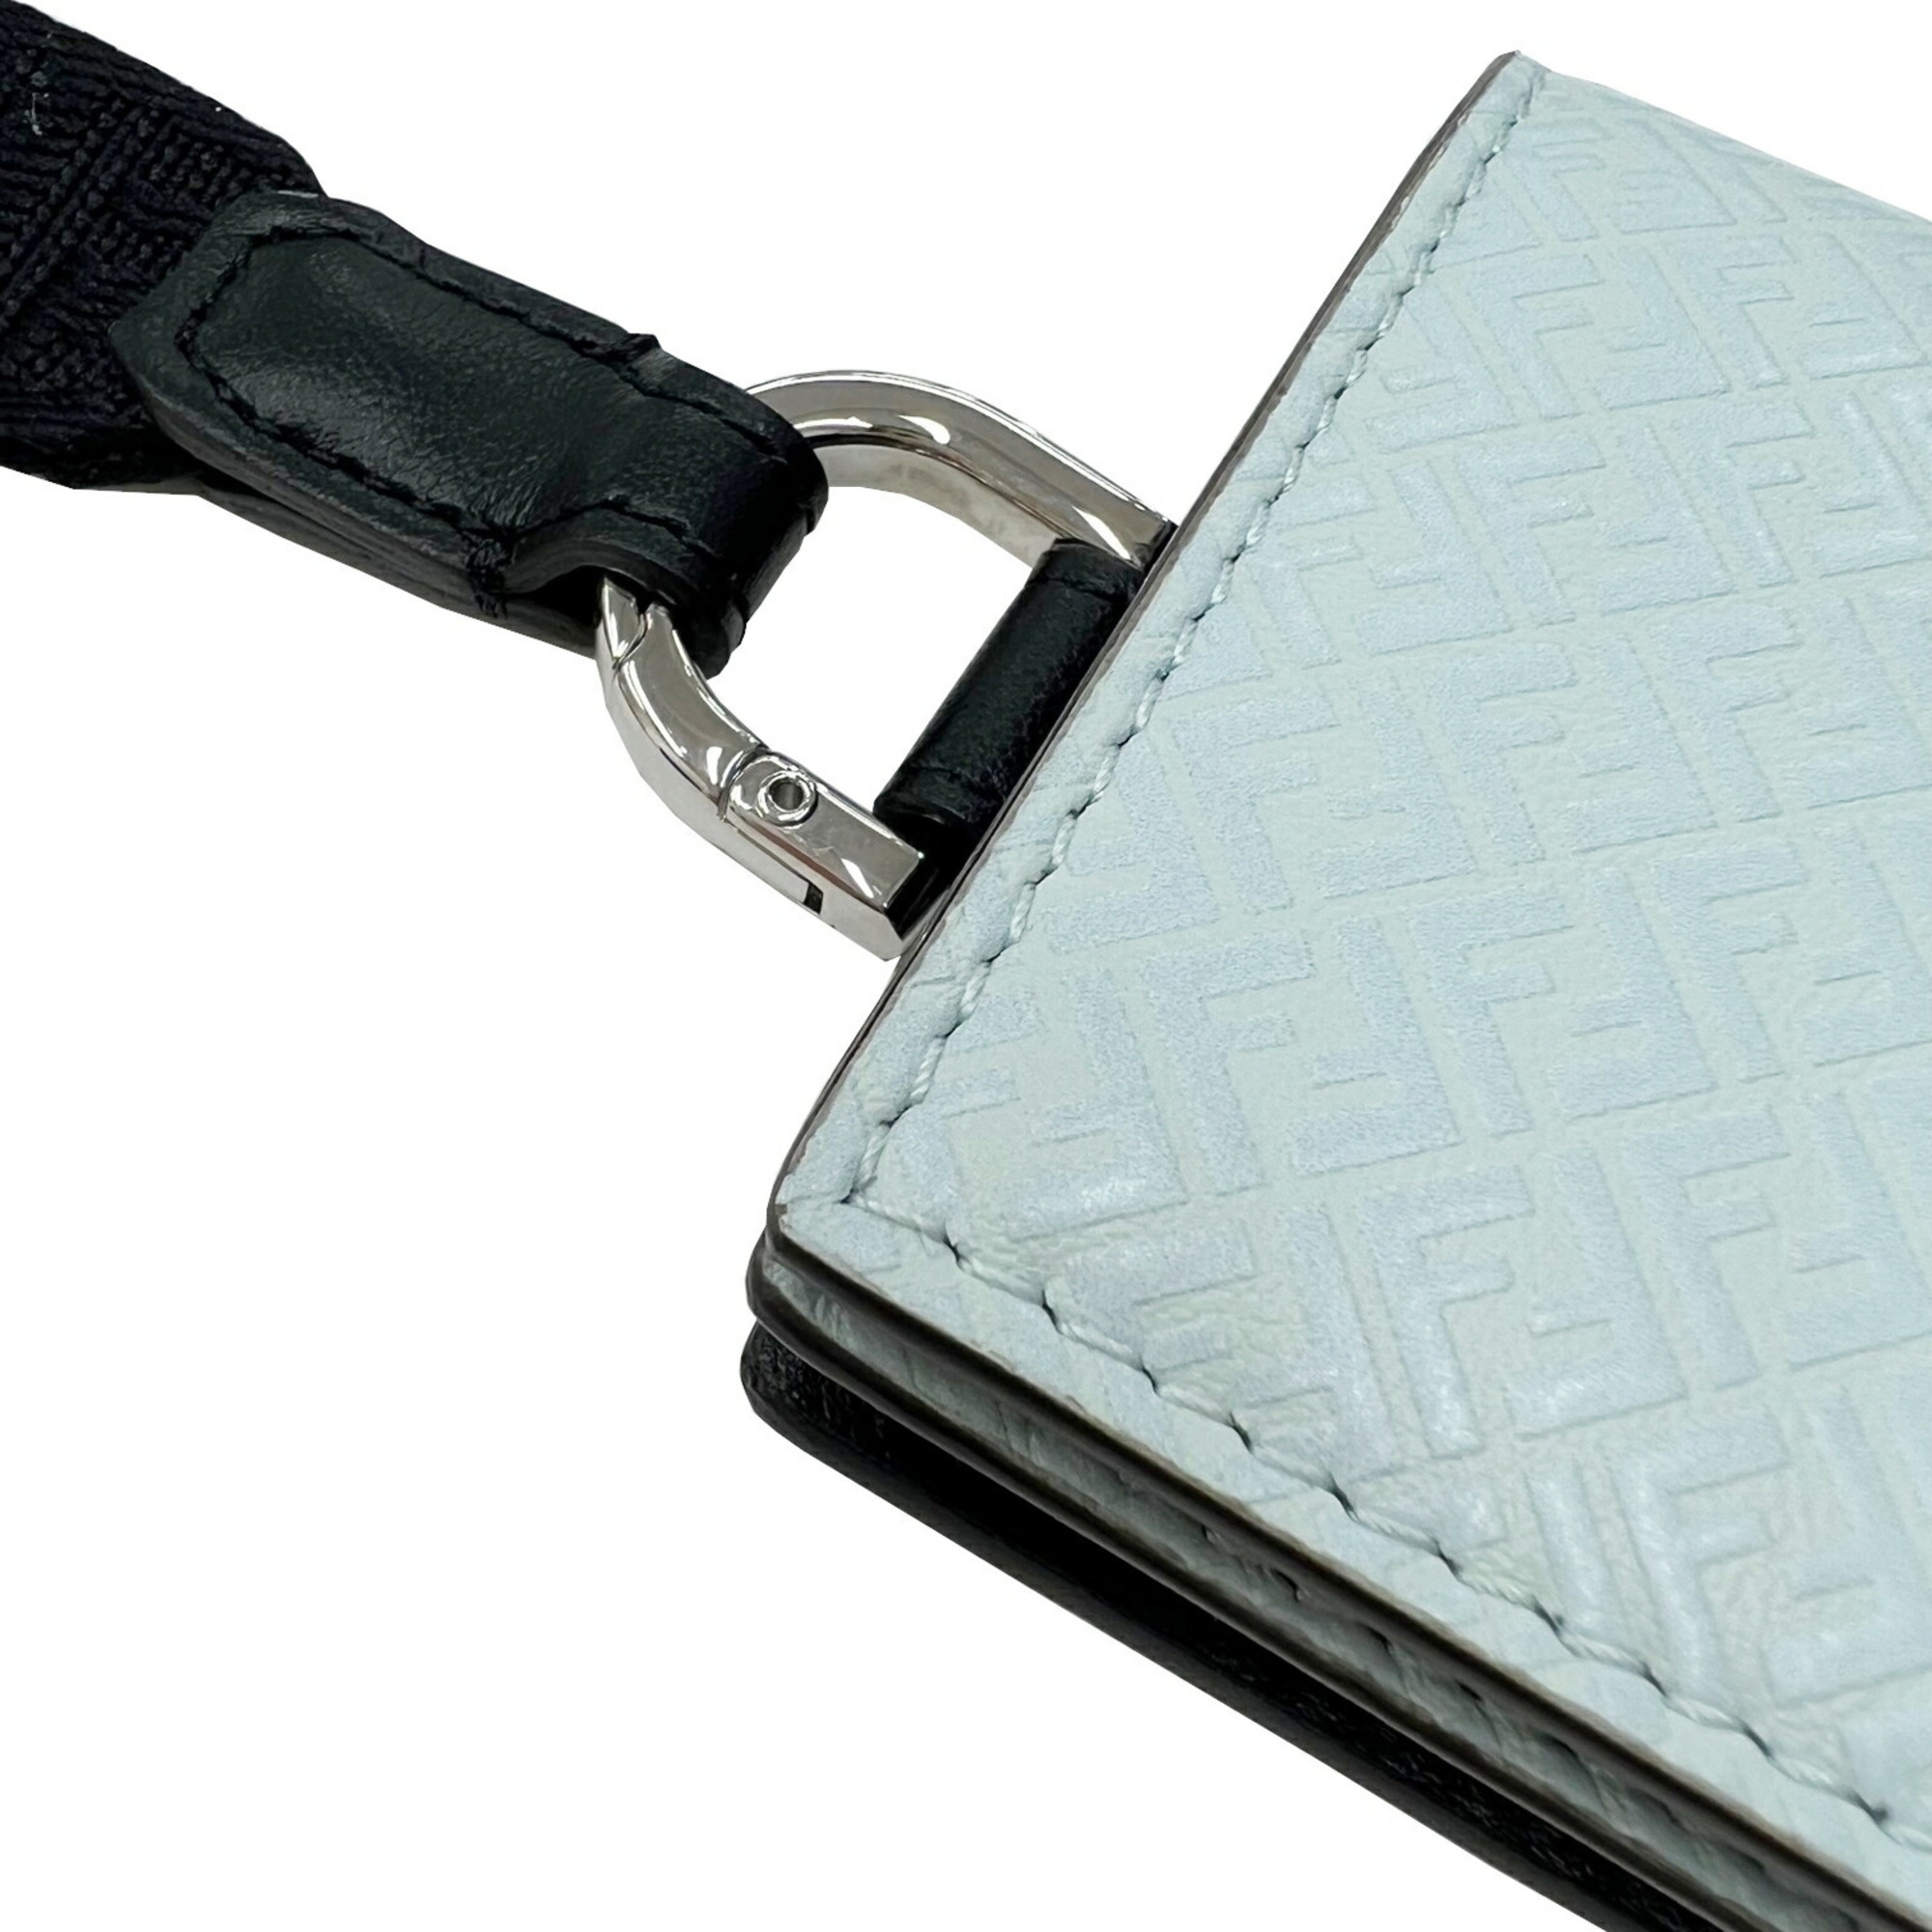 Fendi FENDI neck strap 2way card case 7M0321 light blue ladies men's leather